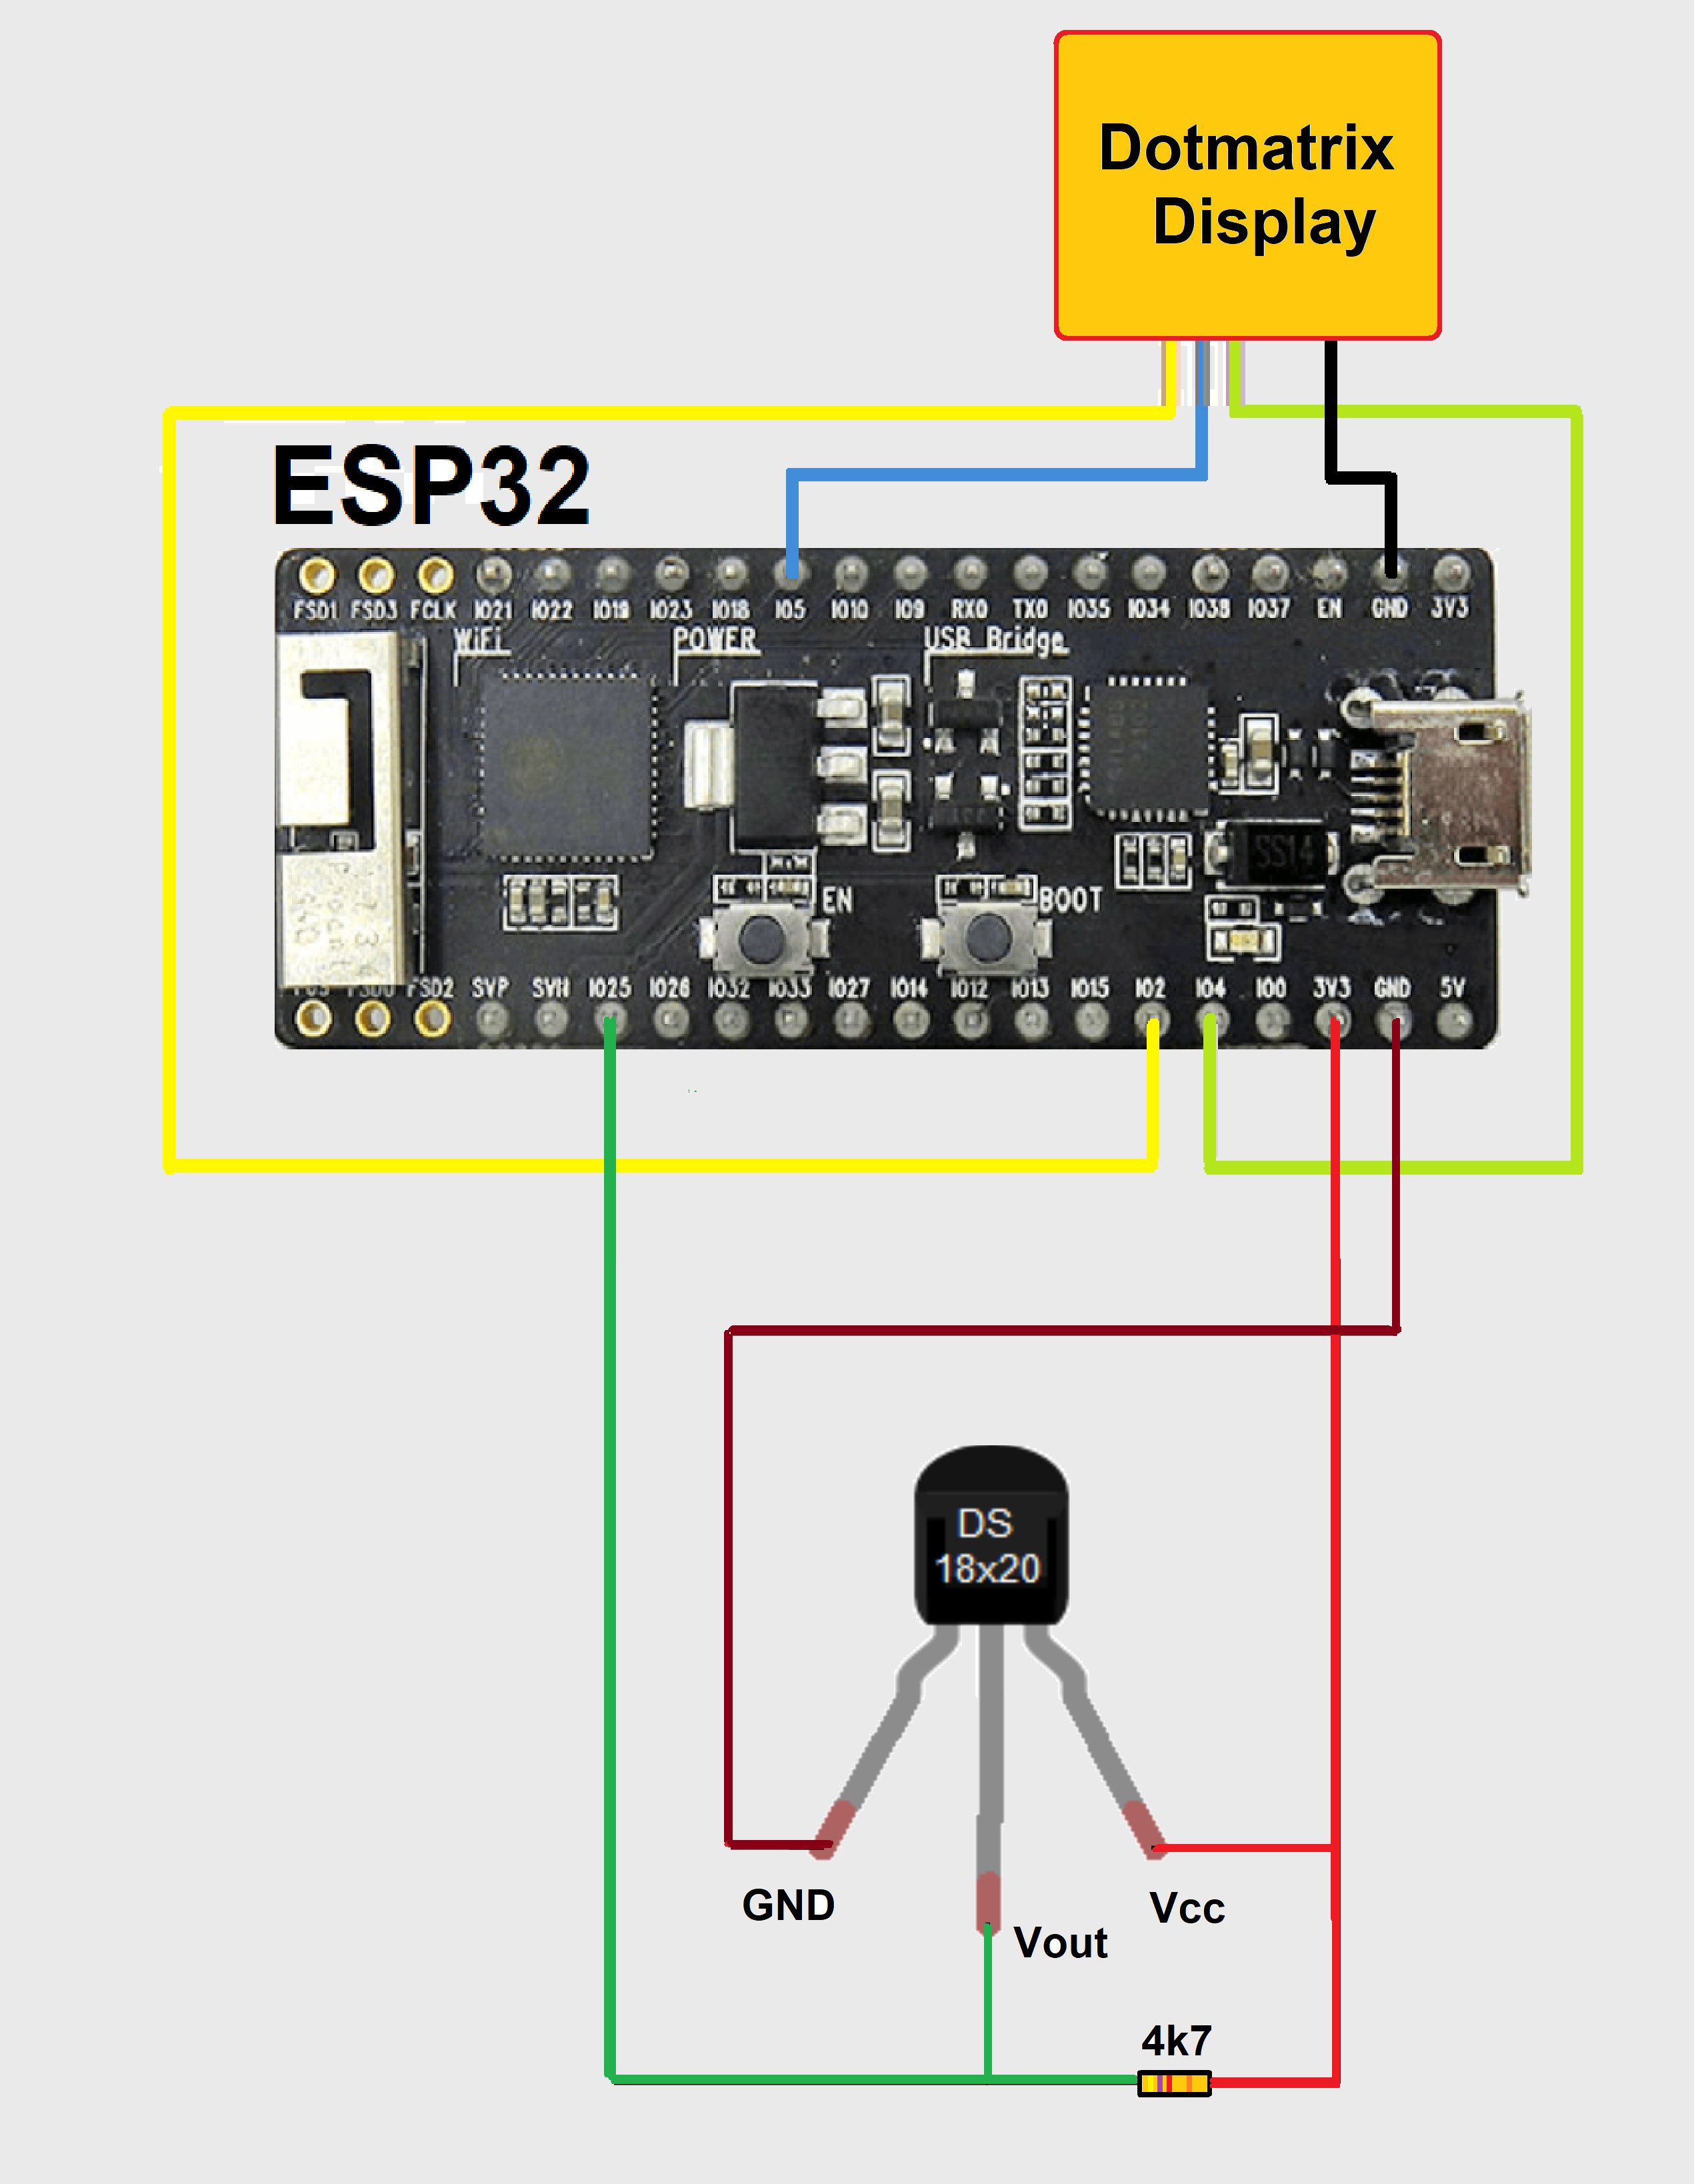 DS18x20 temperatuursensor op ESP32-controller.